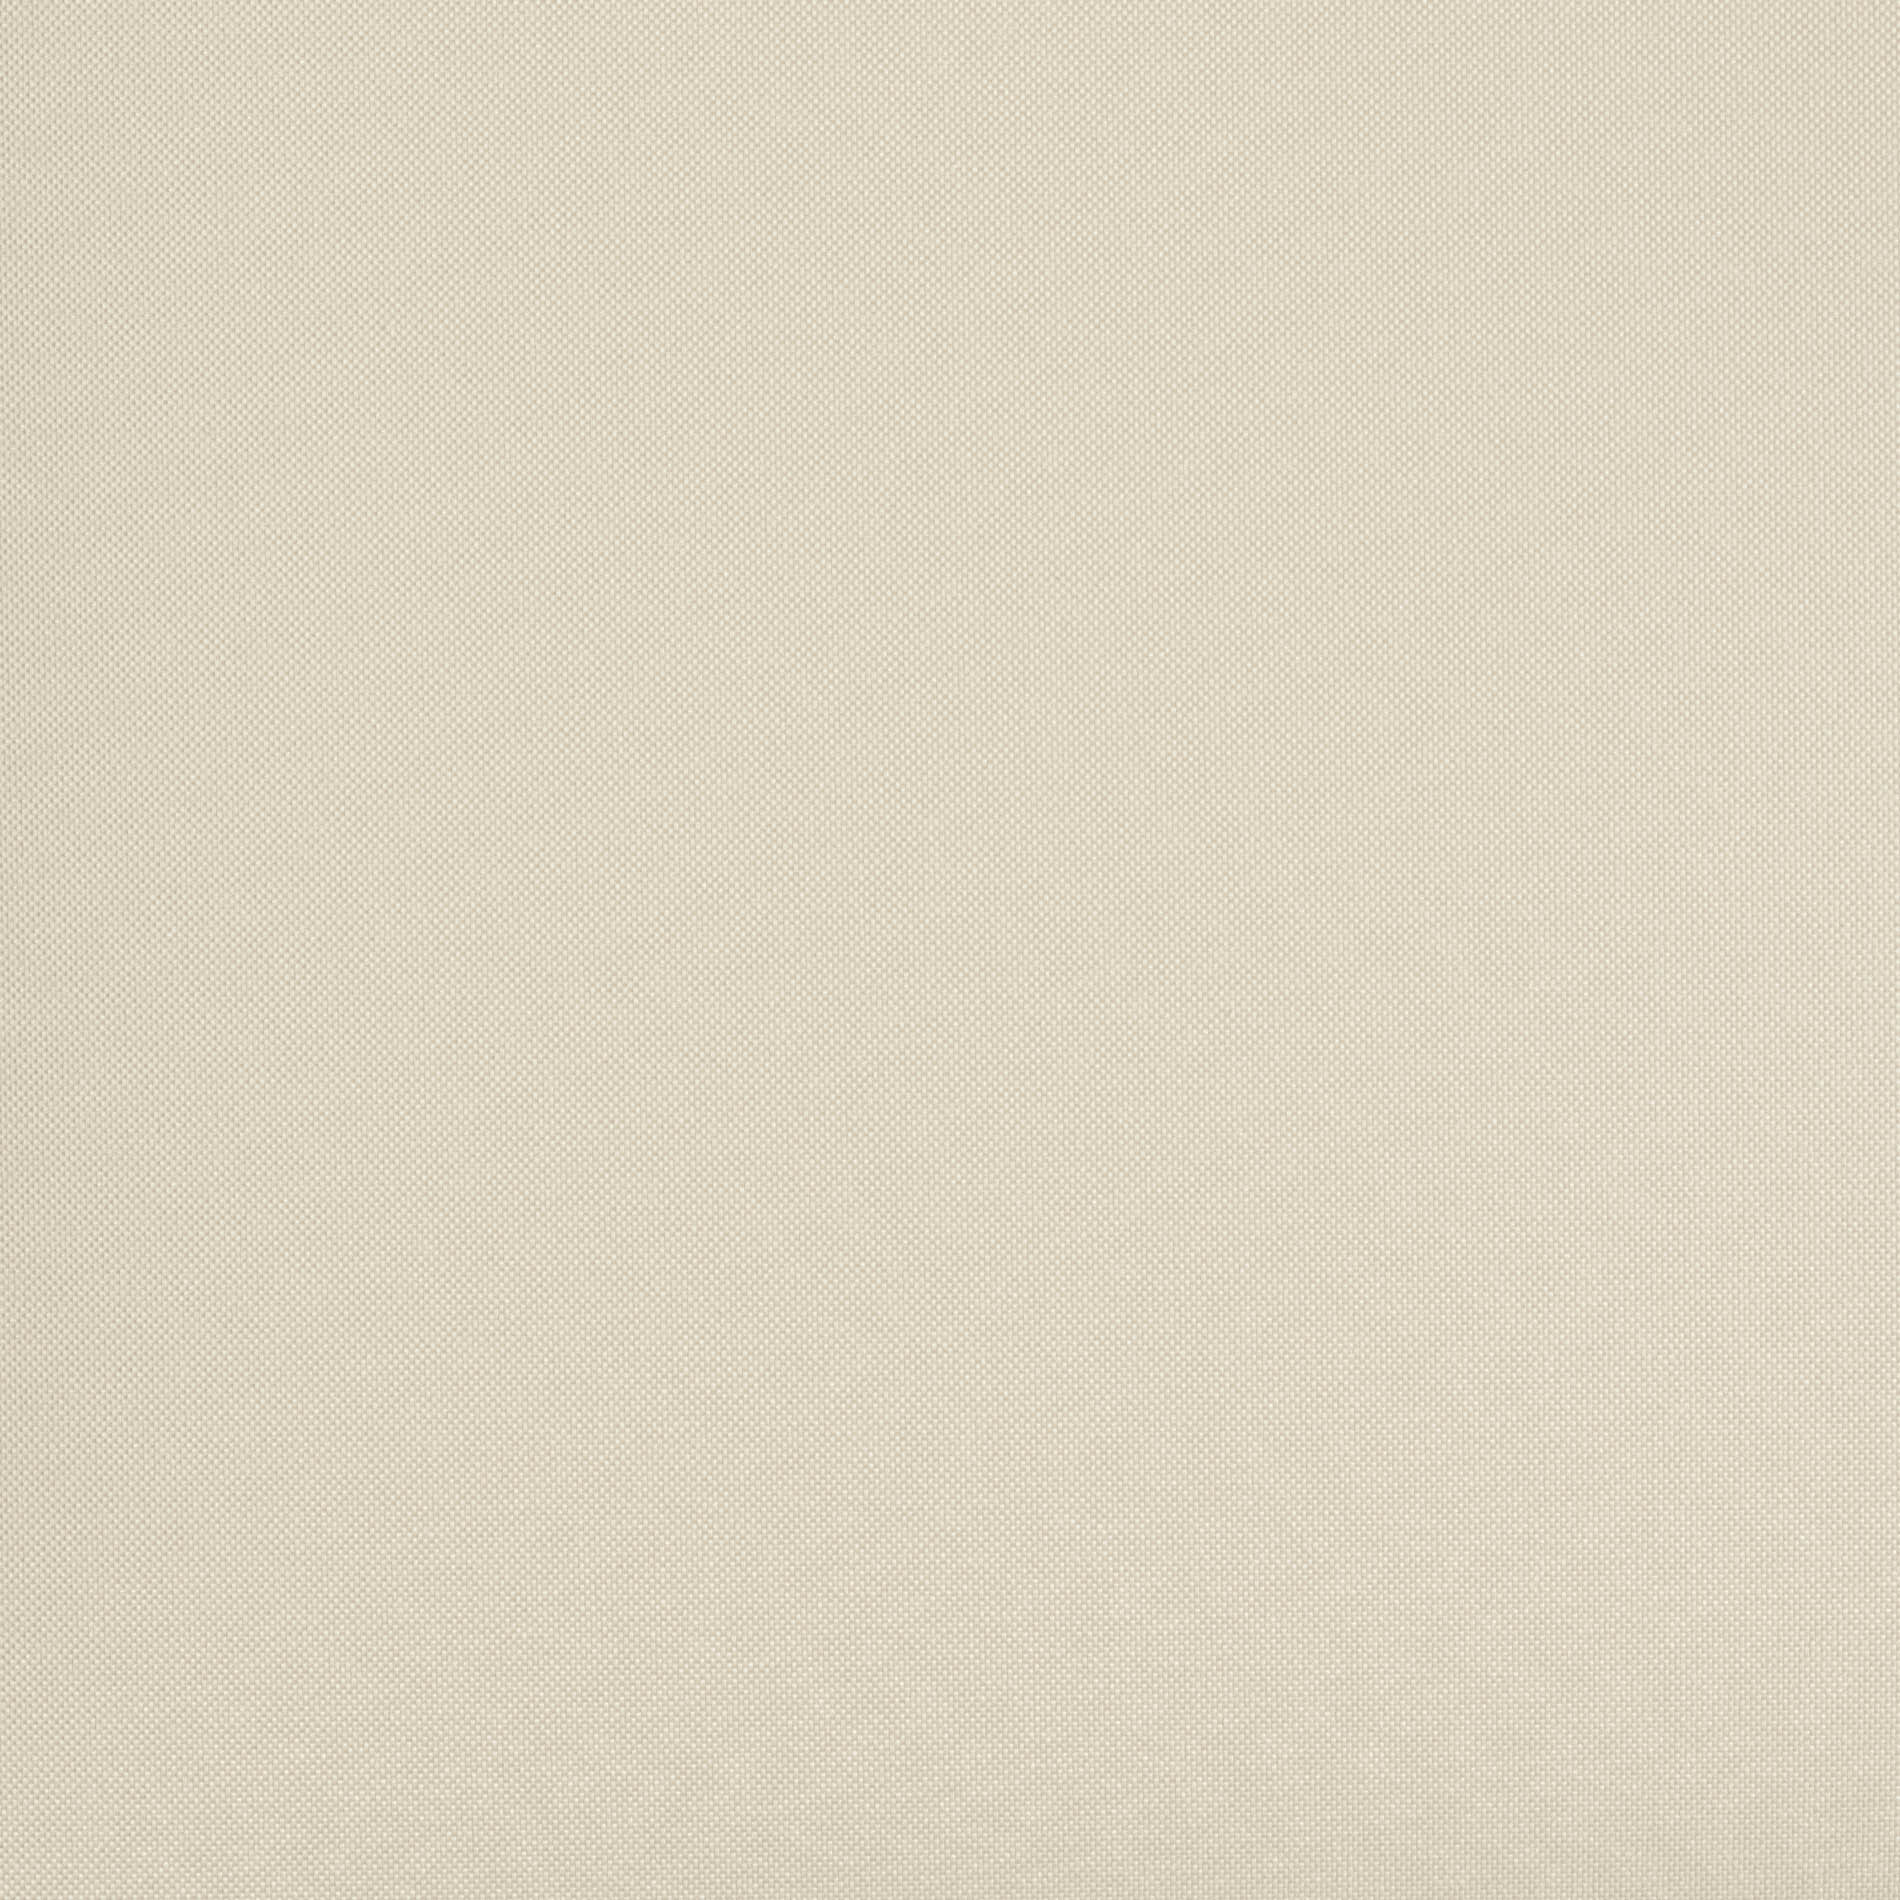 Altex - Fabric - GLOBE - Desert Sand/White - 1653